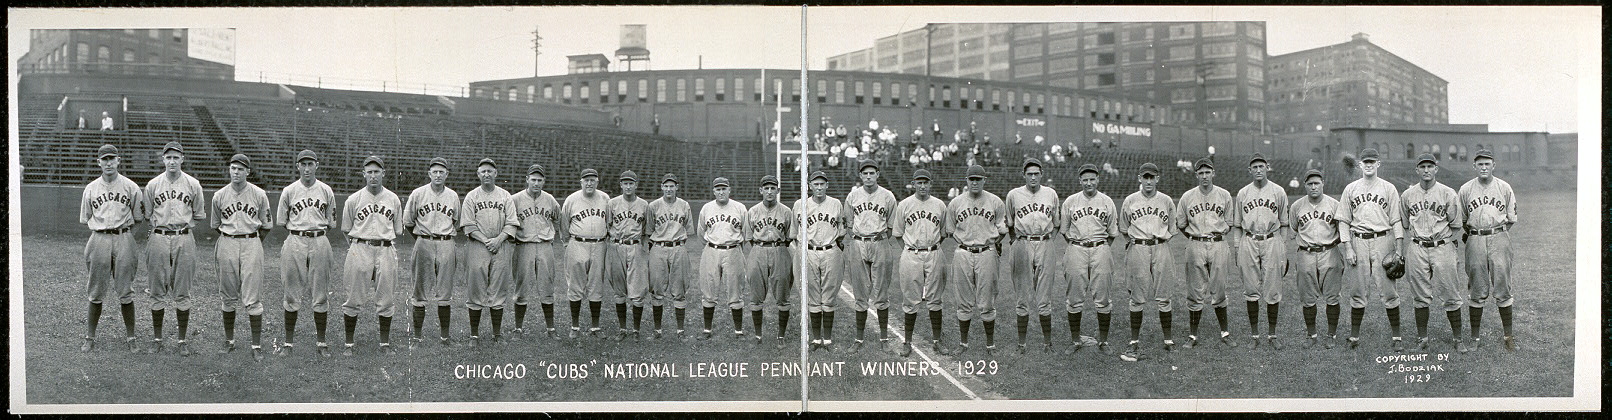 Chicago Cubs, National League pennant winners, 1929.jpg